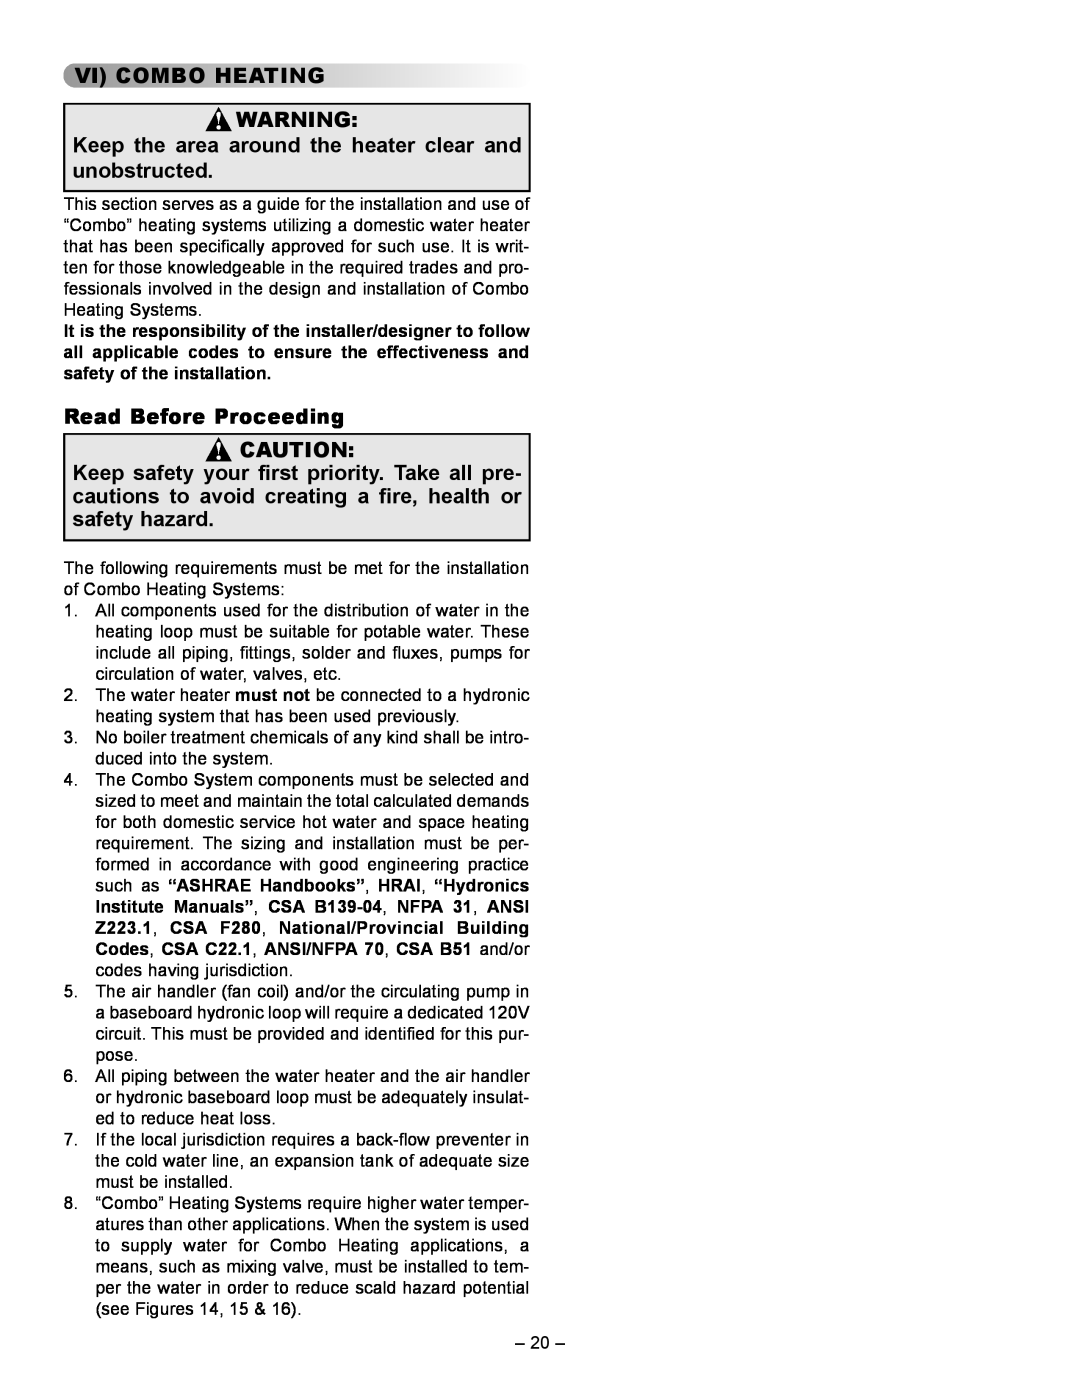 GSW JWF507, JWF657 manual Vi Combo Heating, Read Before Proceeding 